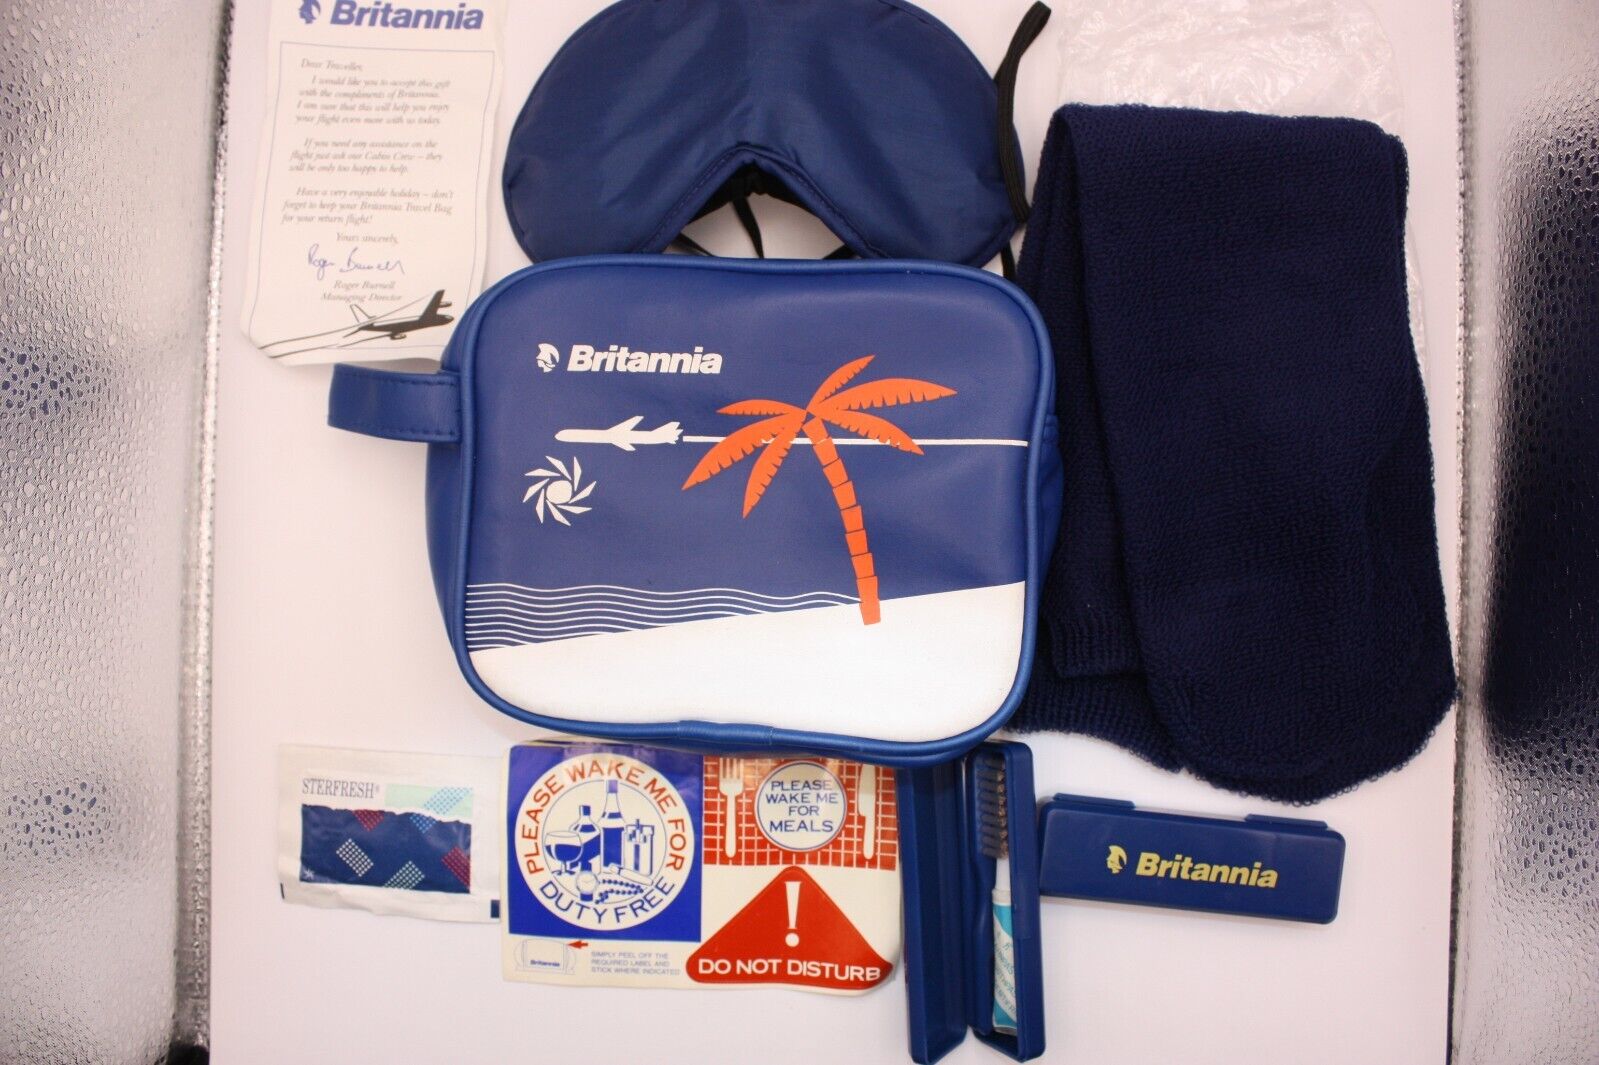 Britannia Airways Travel Bag Retro Vintage Airline Inflight Wash Amenity Kit